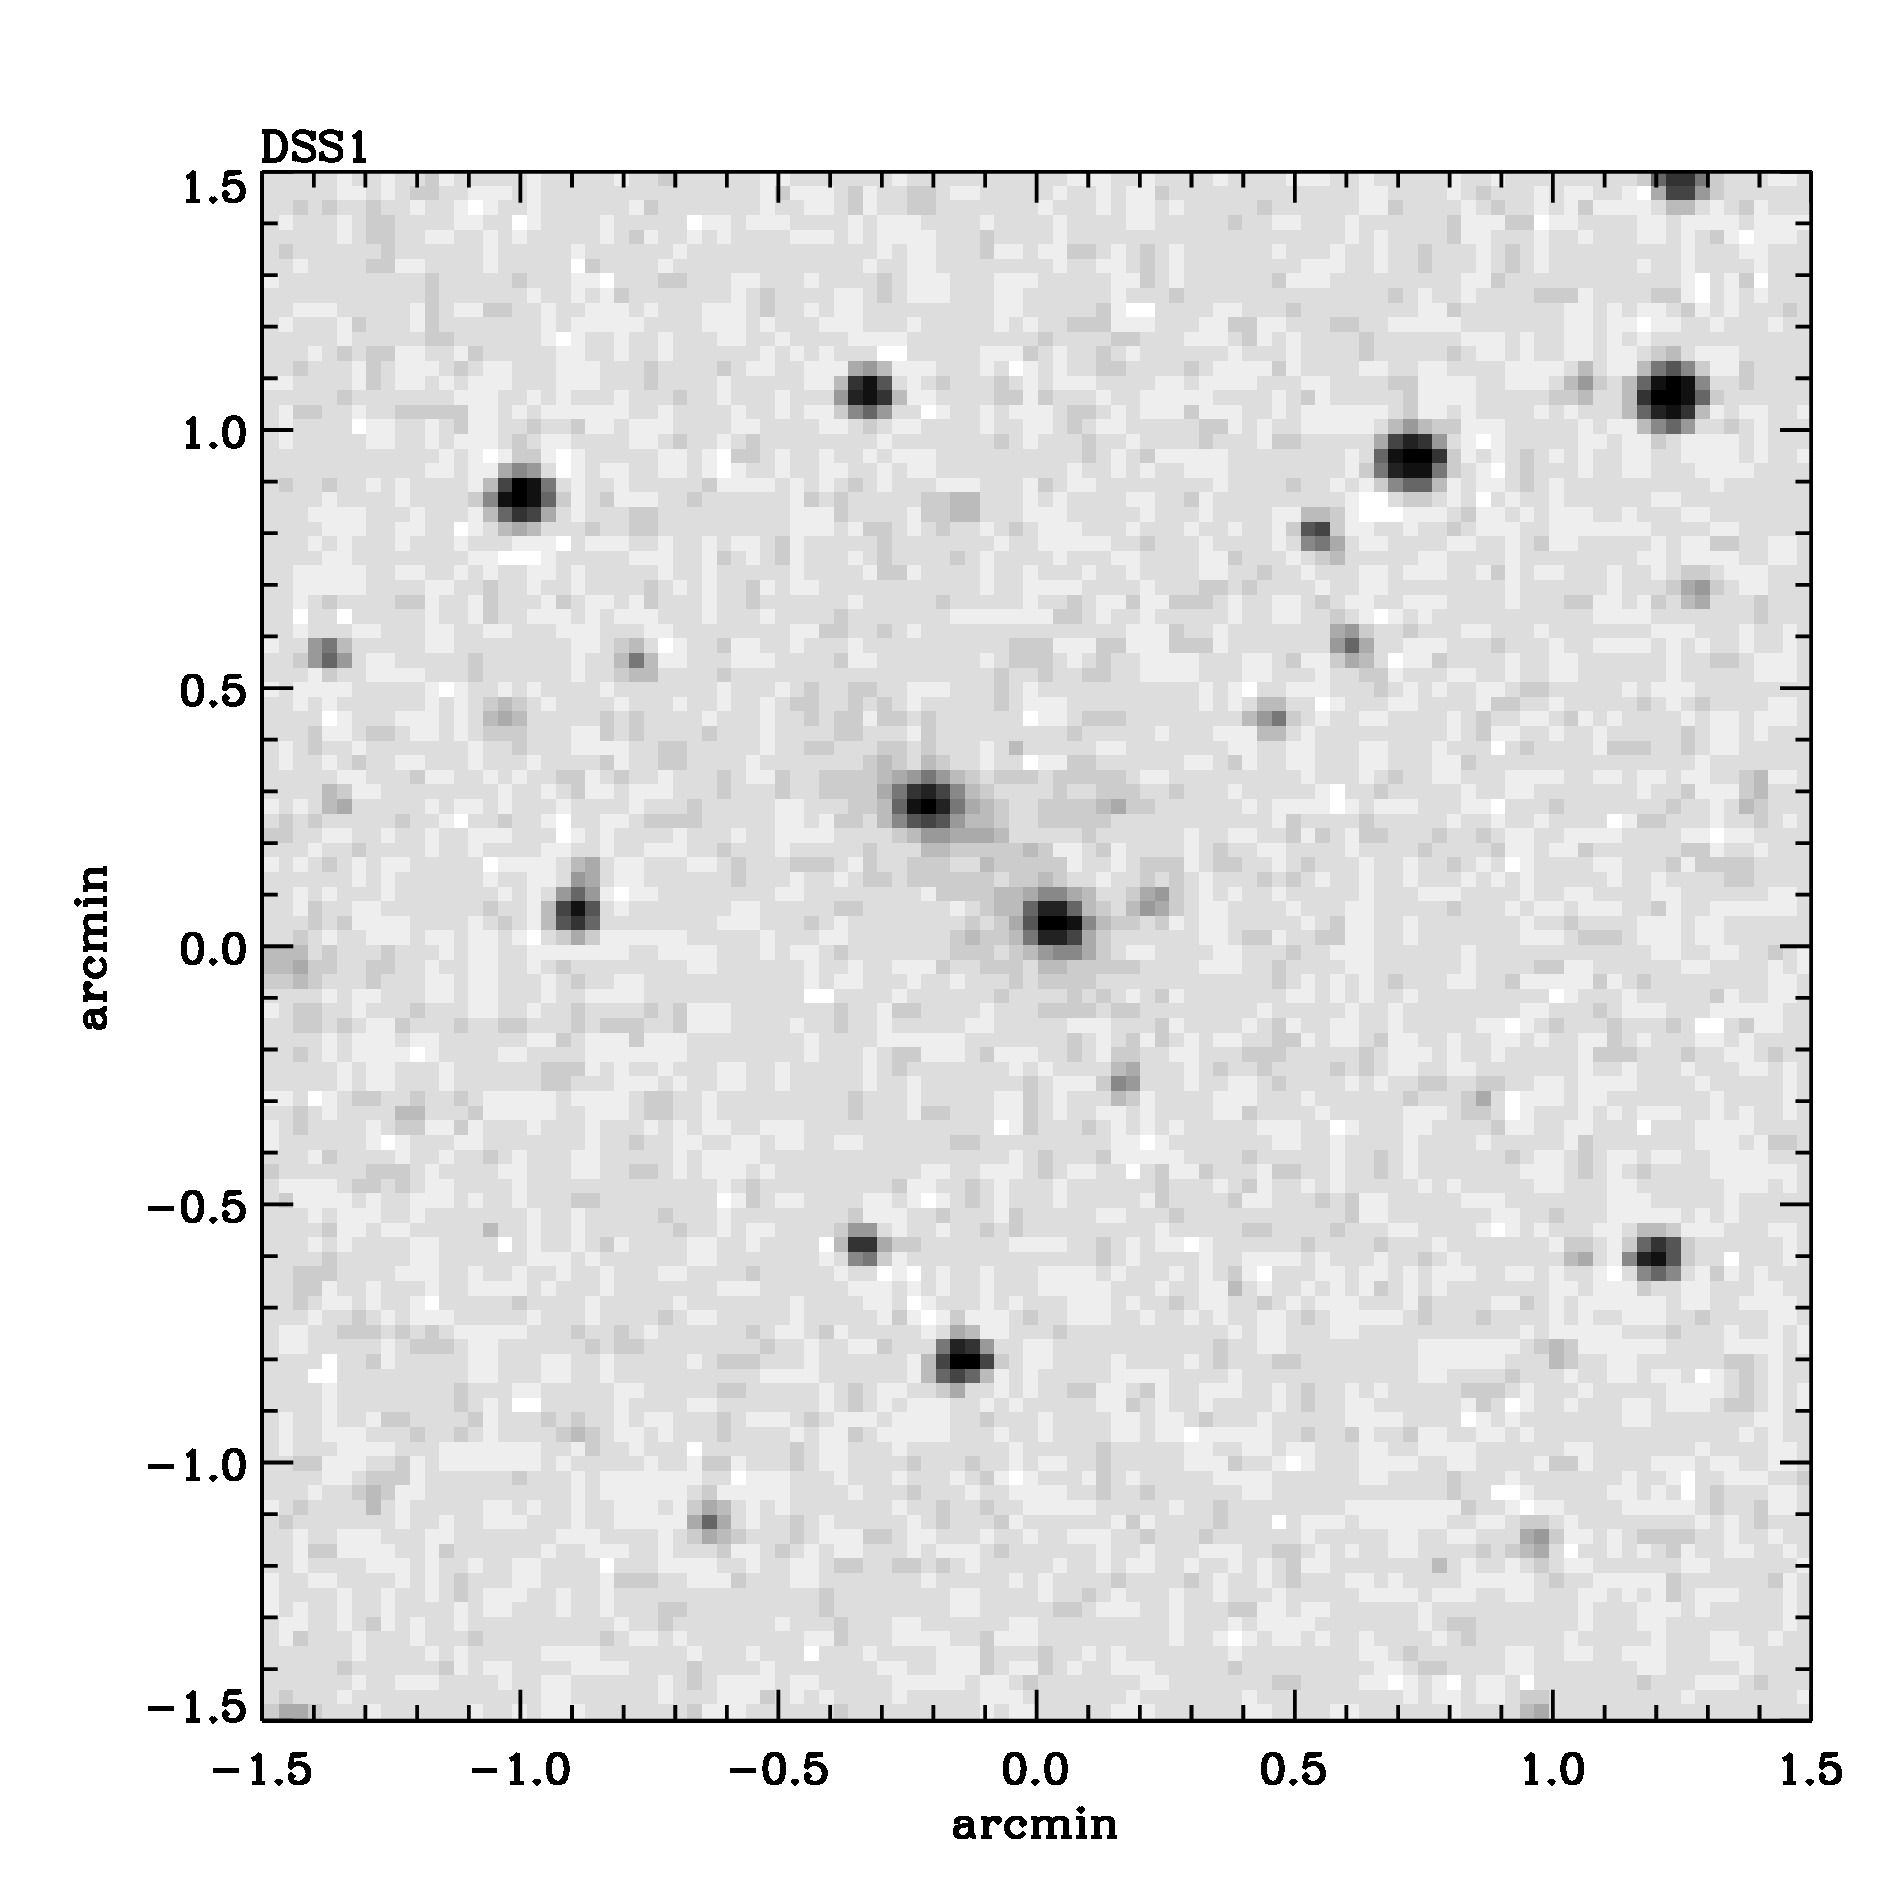 Optical image for SWIFT J1542.0-1410